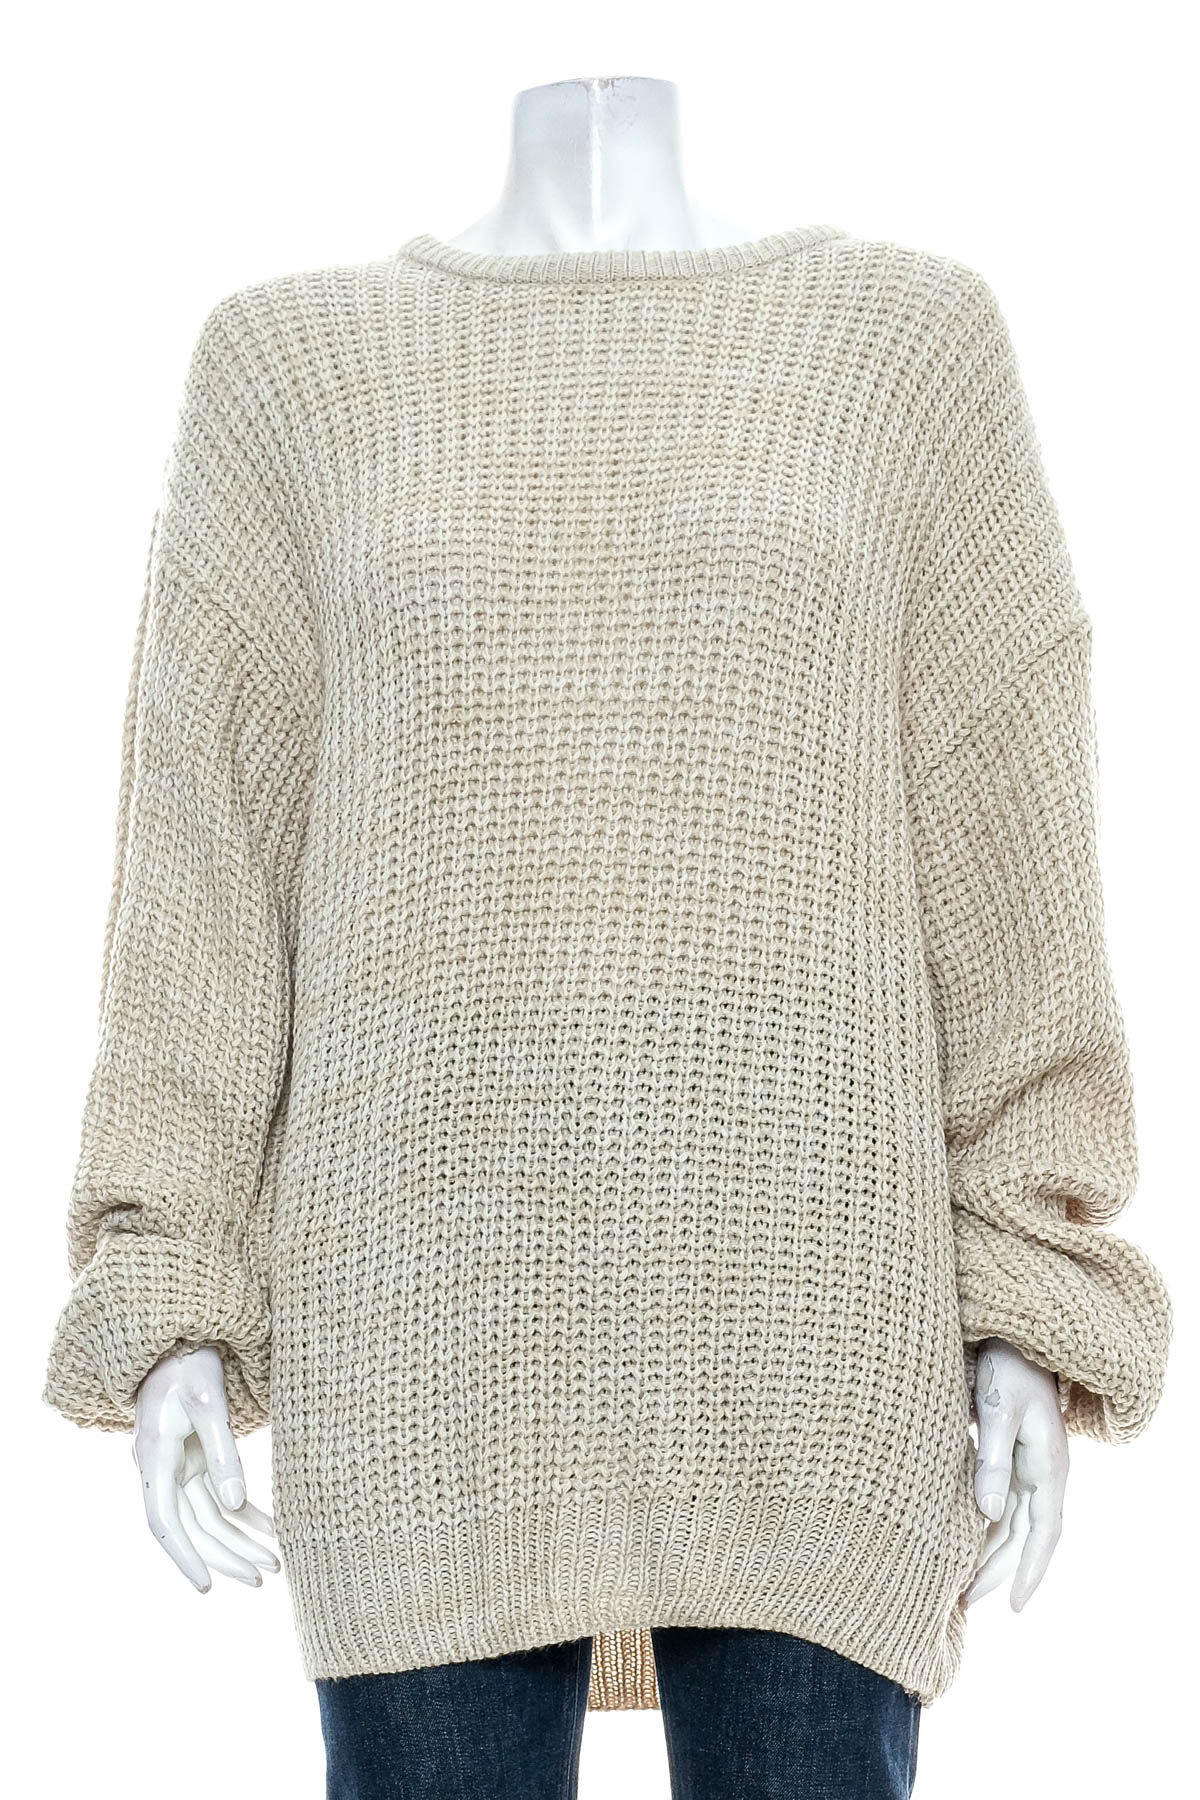 Women's sweater - Basic Editions - 0